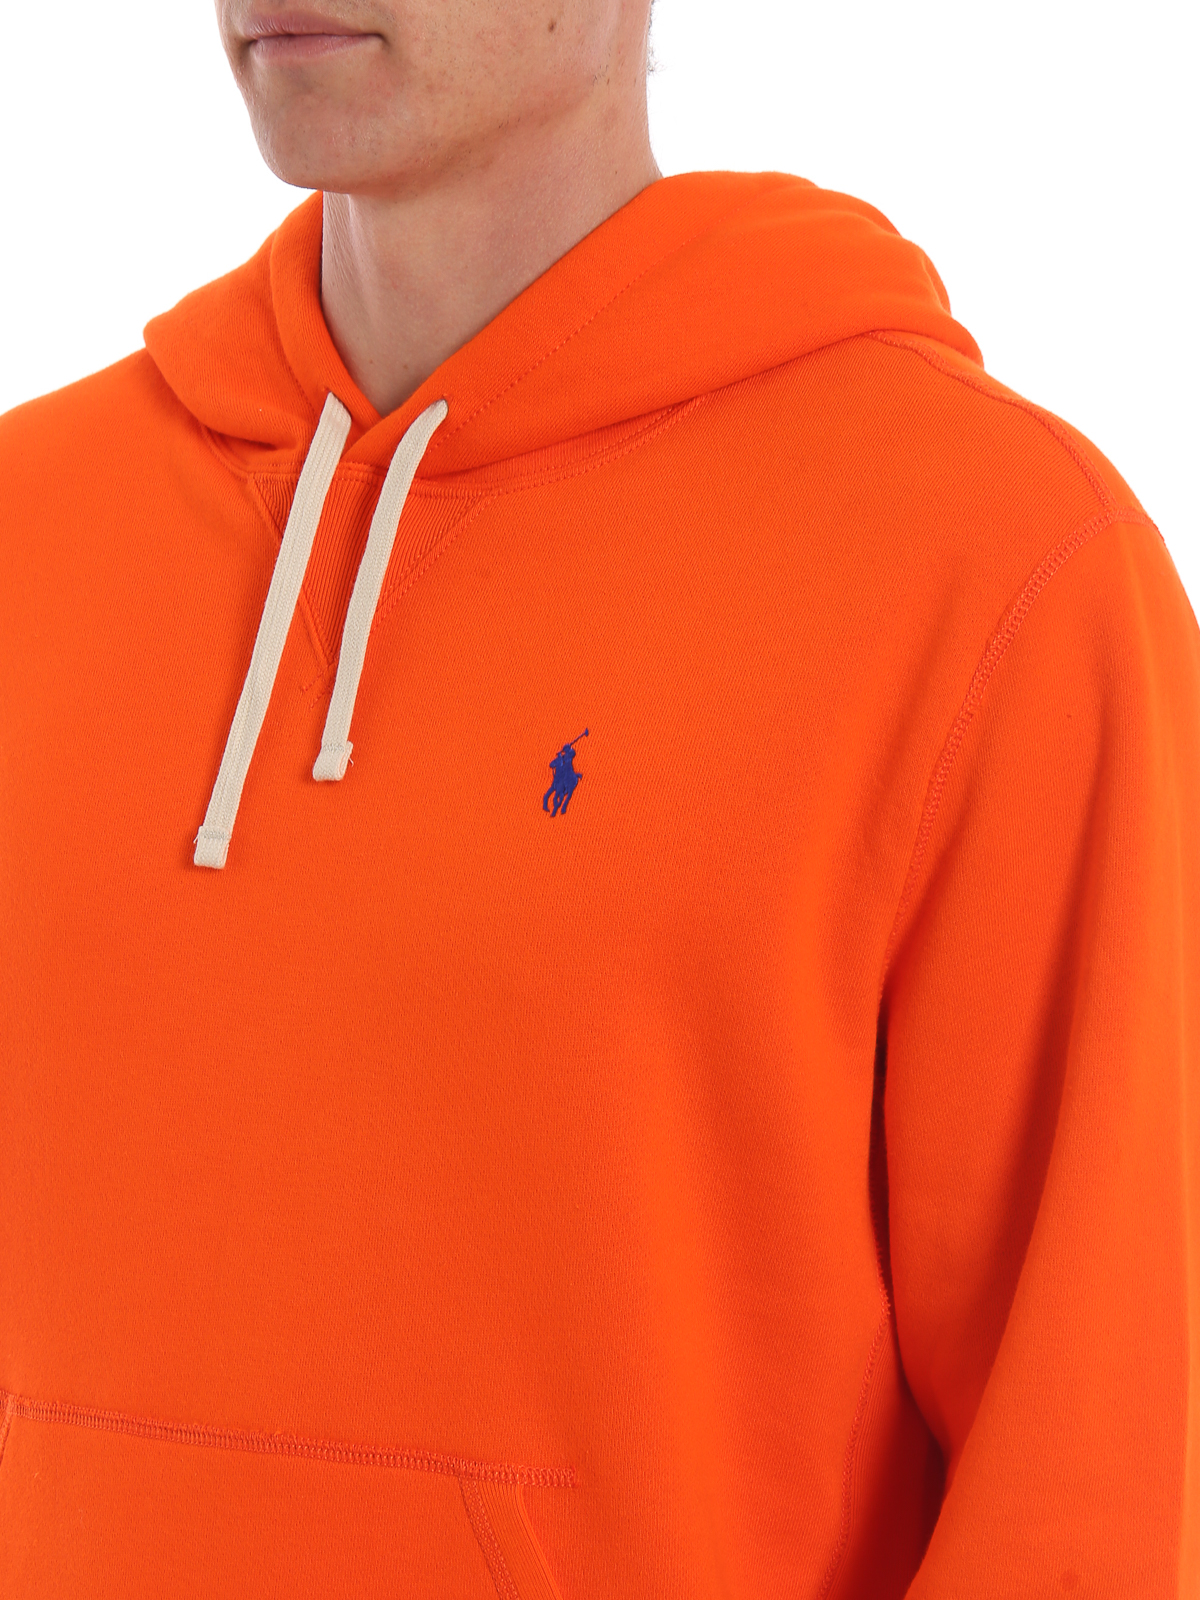 Sweatshirts & Sweaters Polo Ralph Lauren - Orange cotton blend hoodie -  710728760009